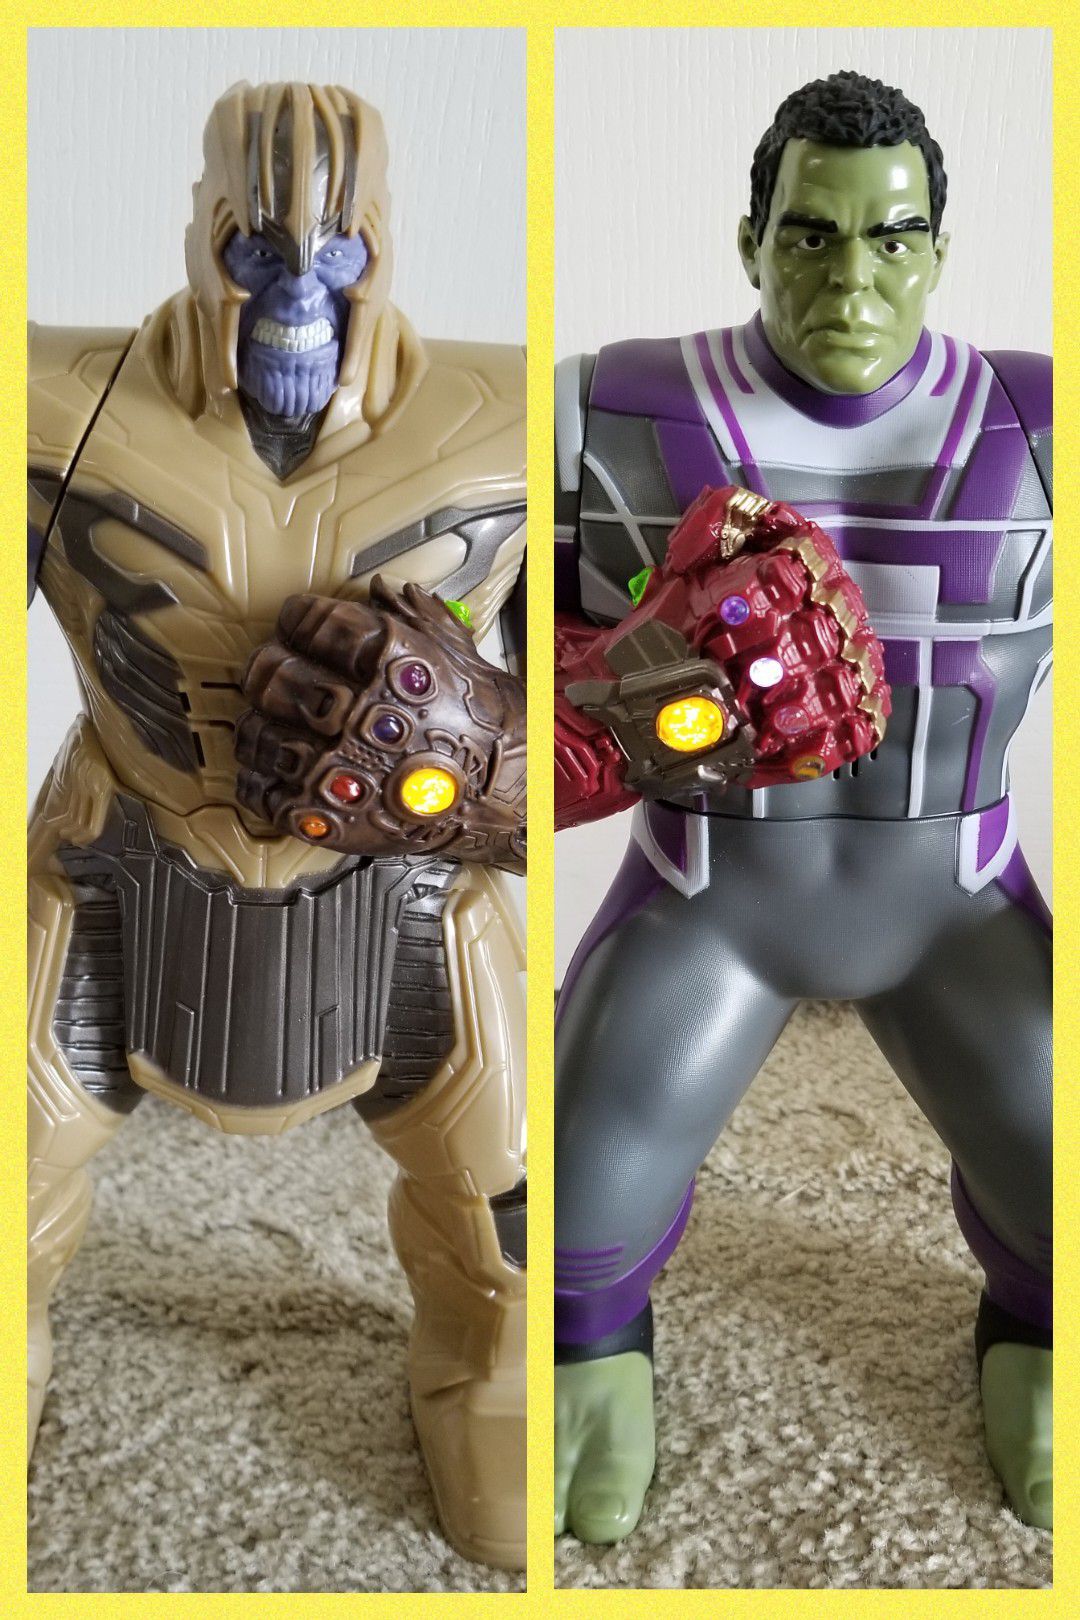 Marvel Avengers Endgame Power Punch Hulk and Thanos Action Figure 2019 - 14”